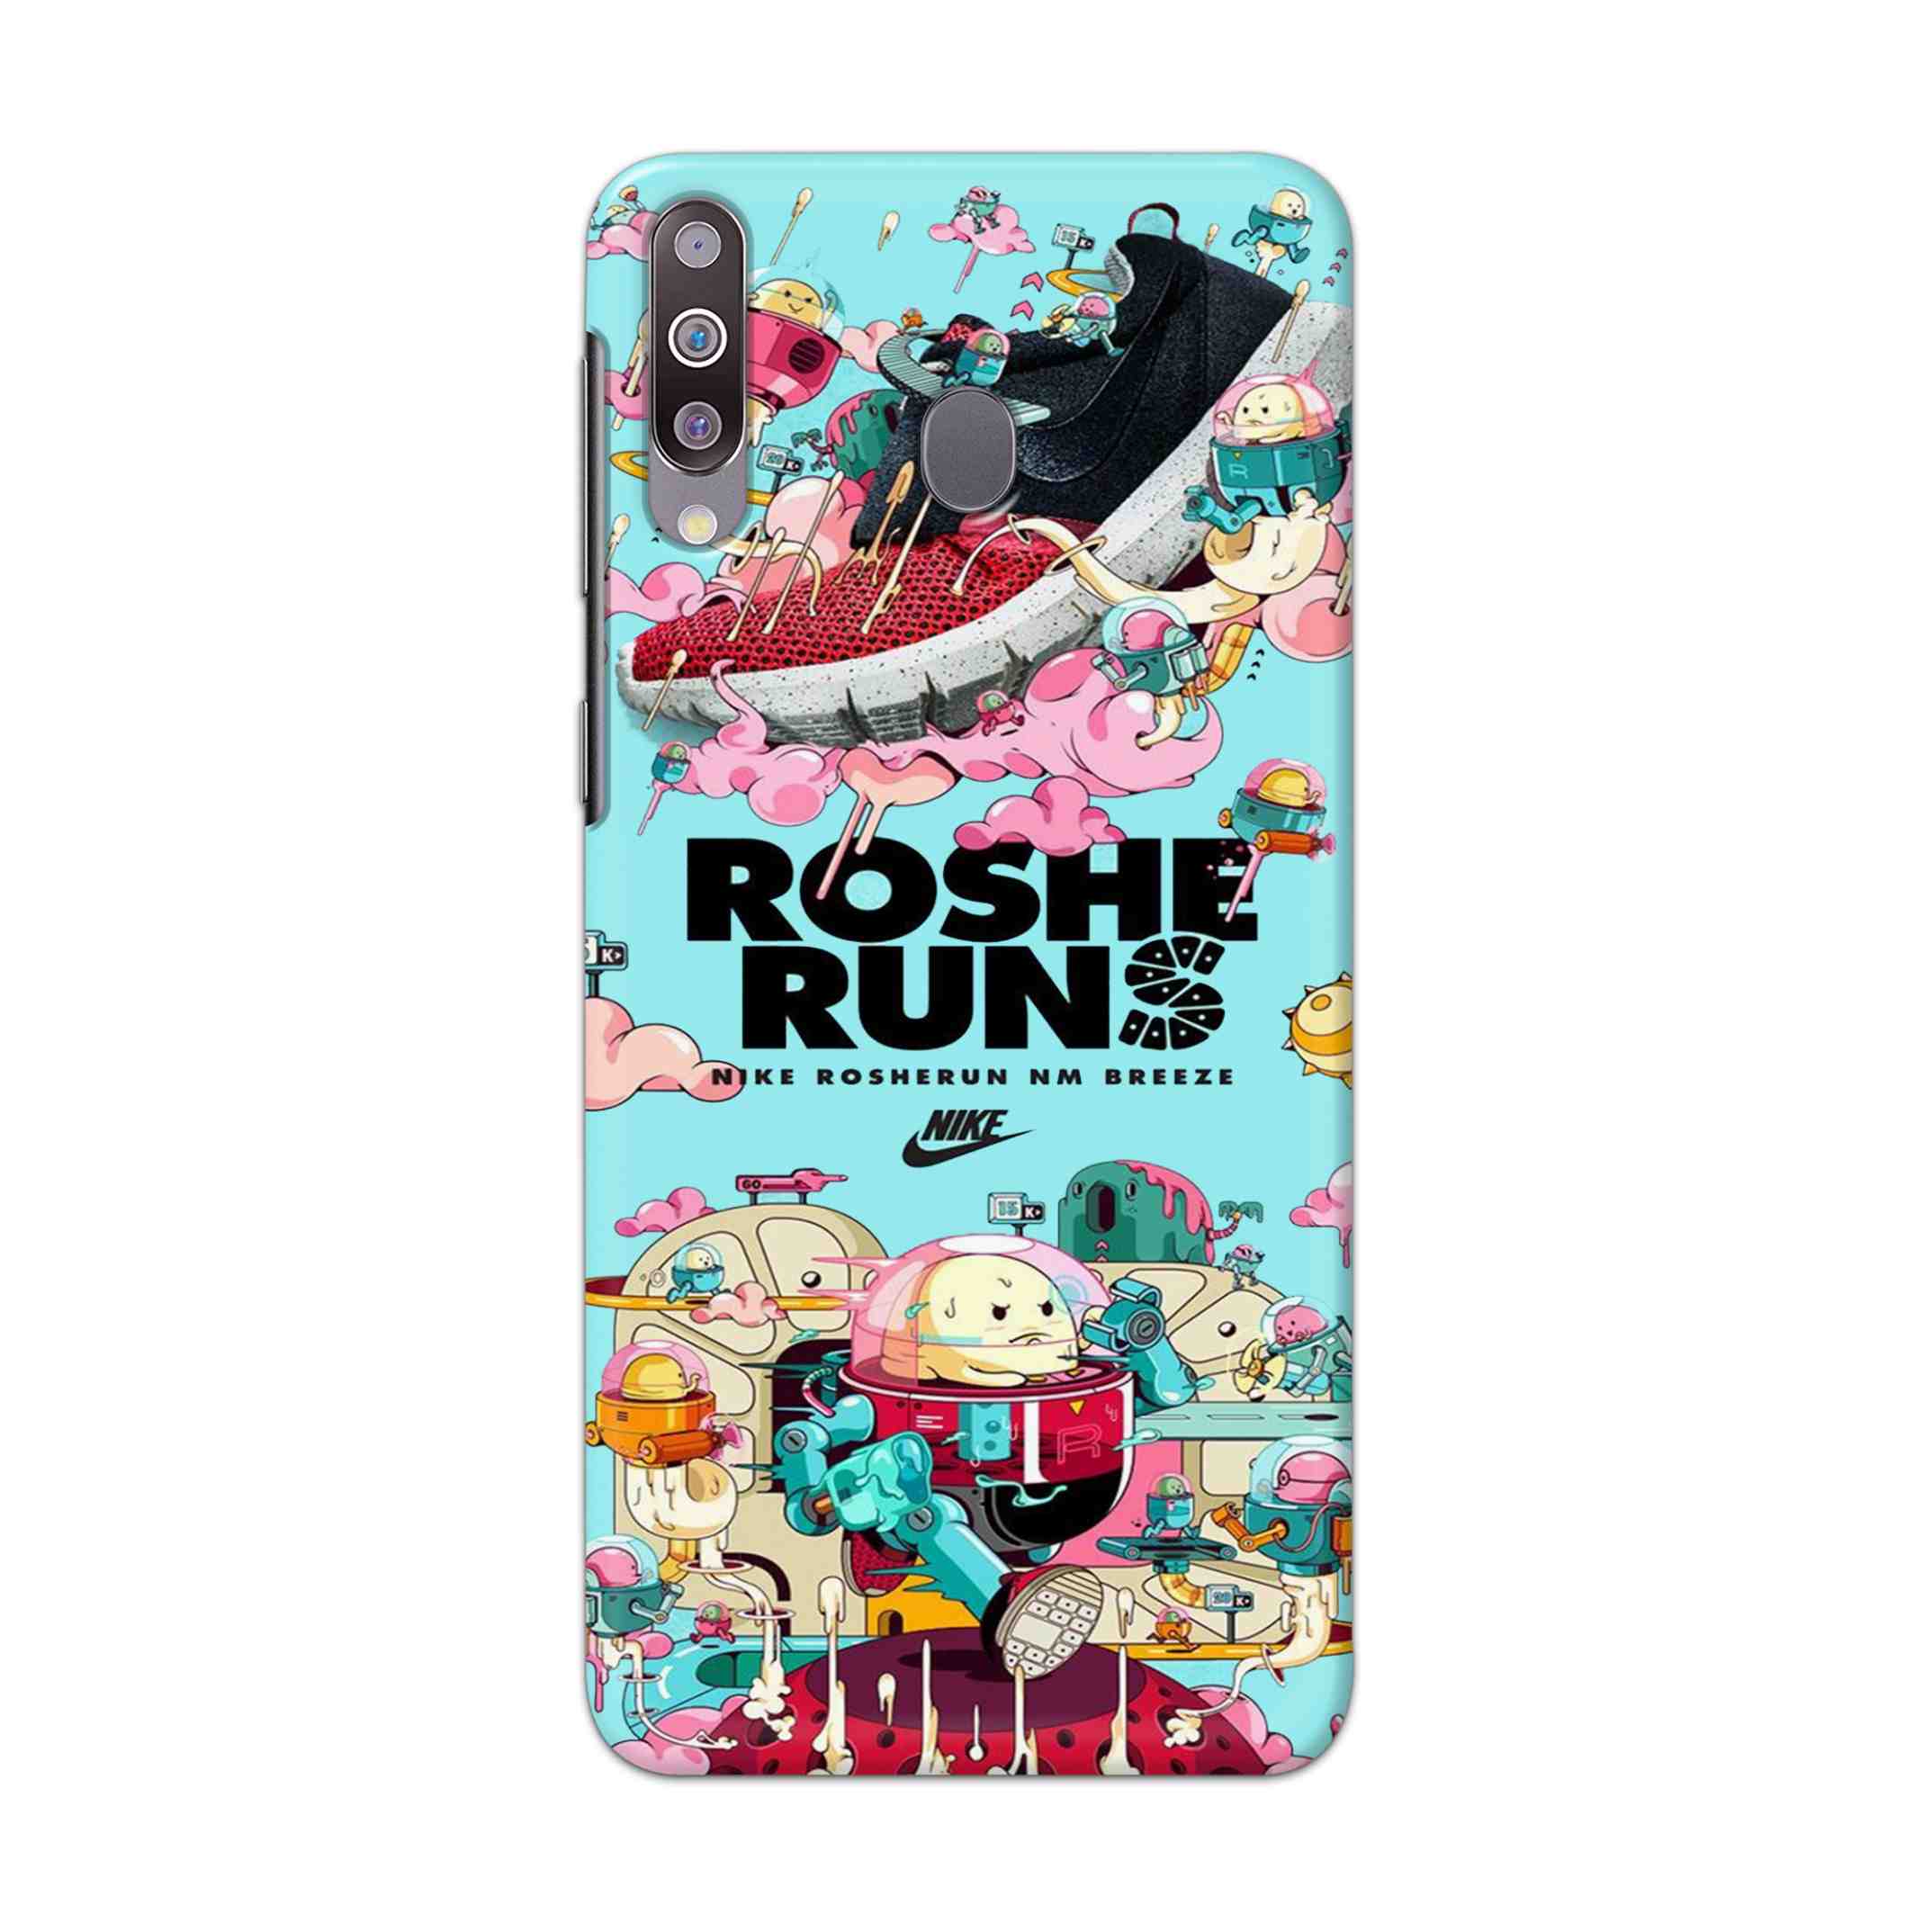 Buy Roshe Runs Hard Back Mobile Phone Case Cover For Samsung Galaxy M30 Online